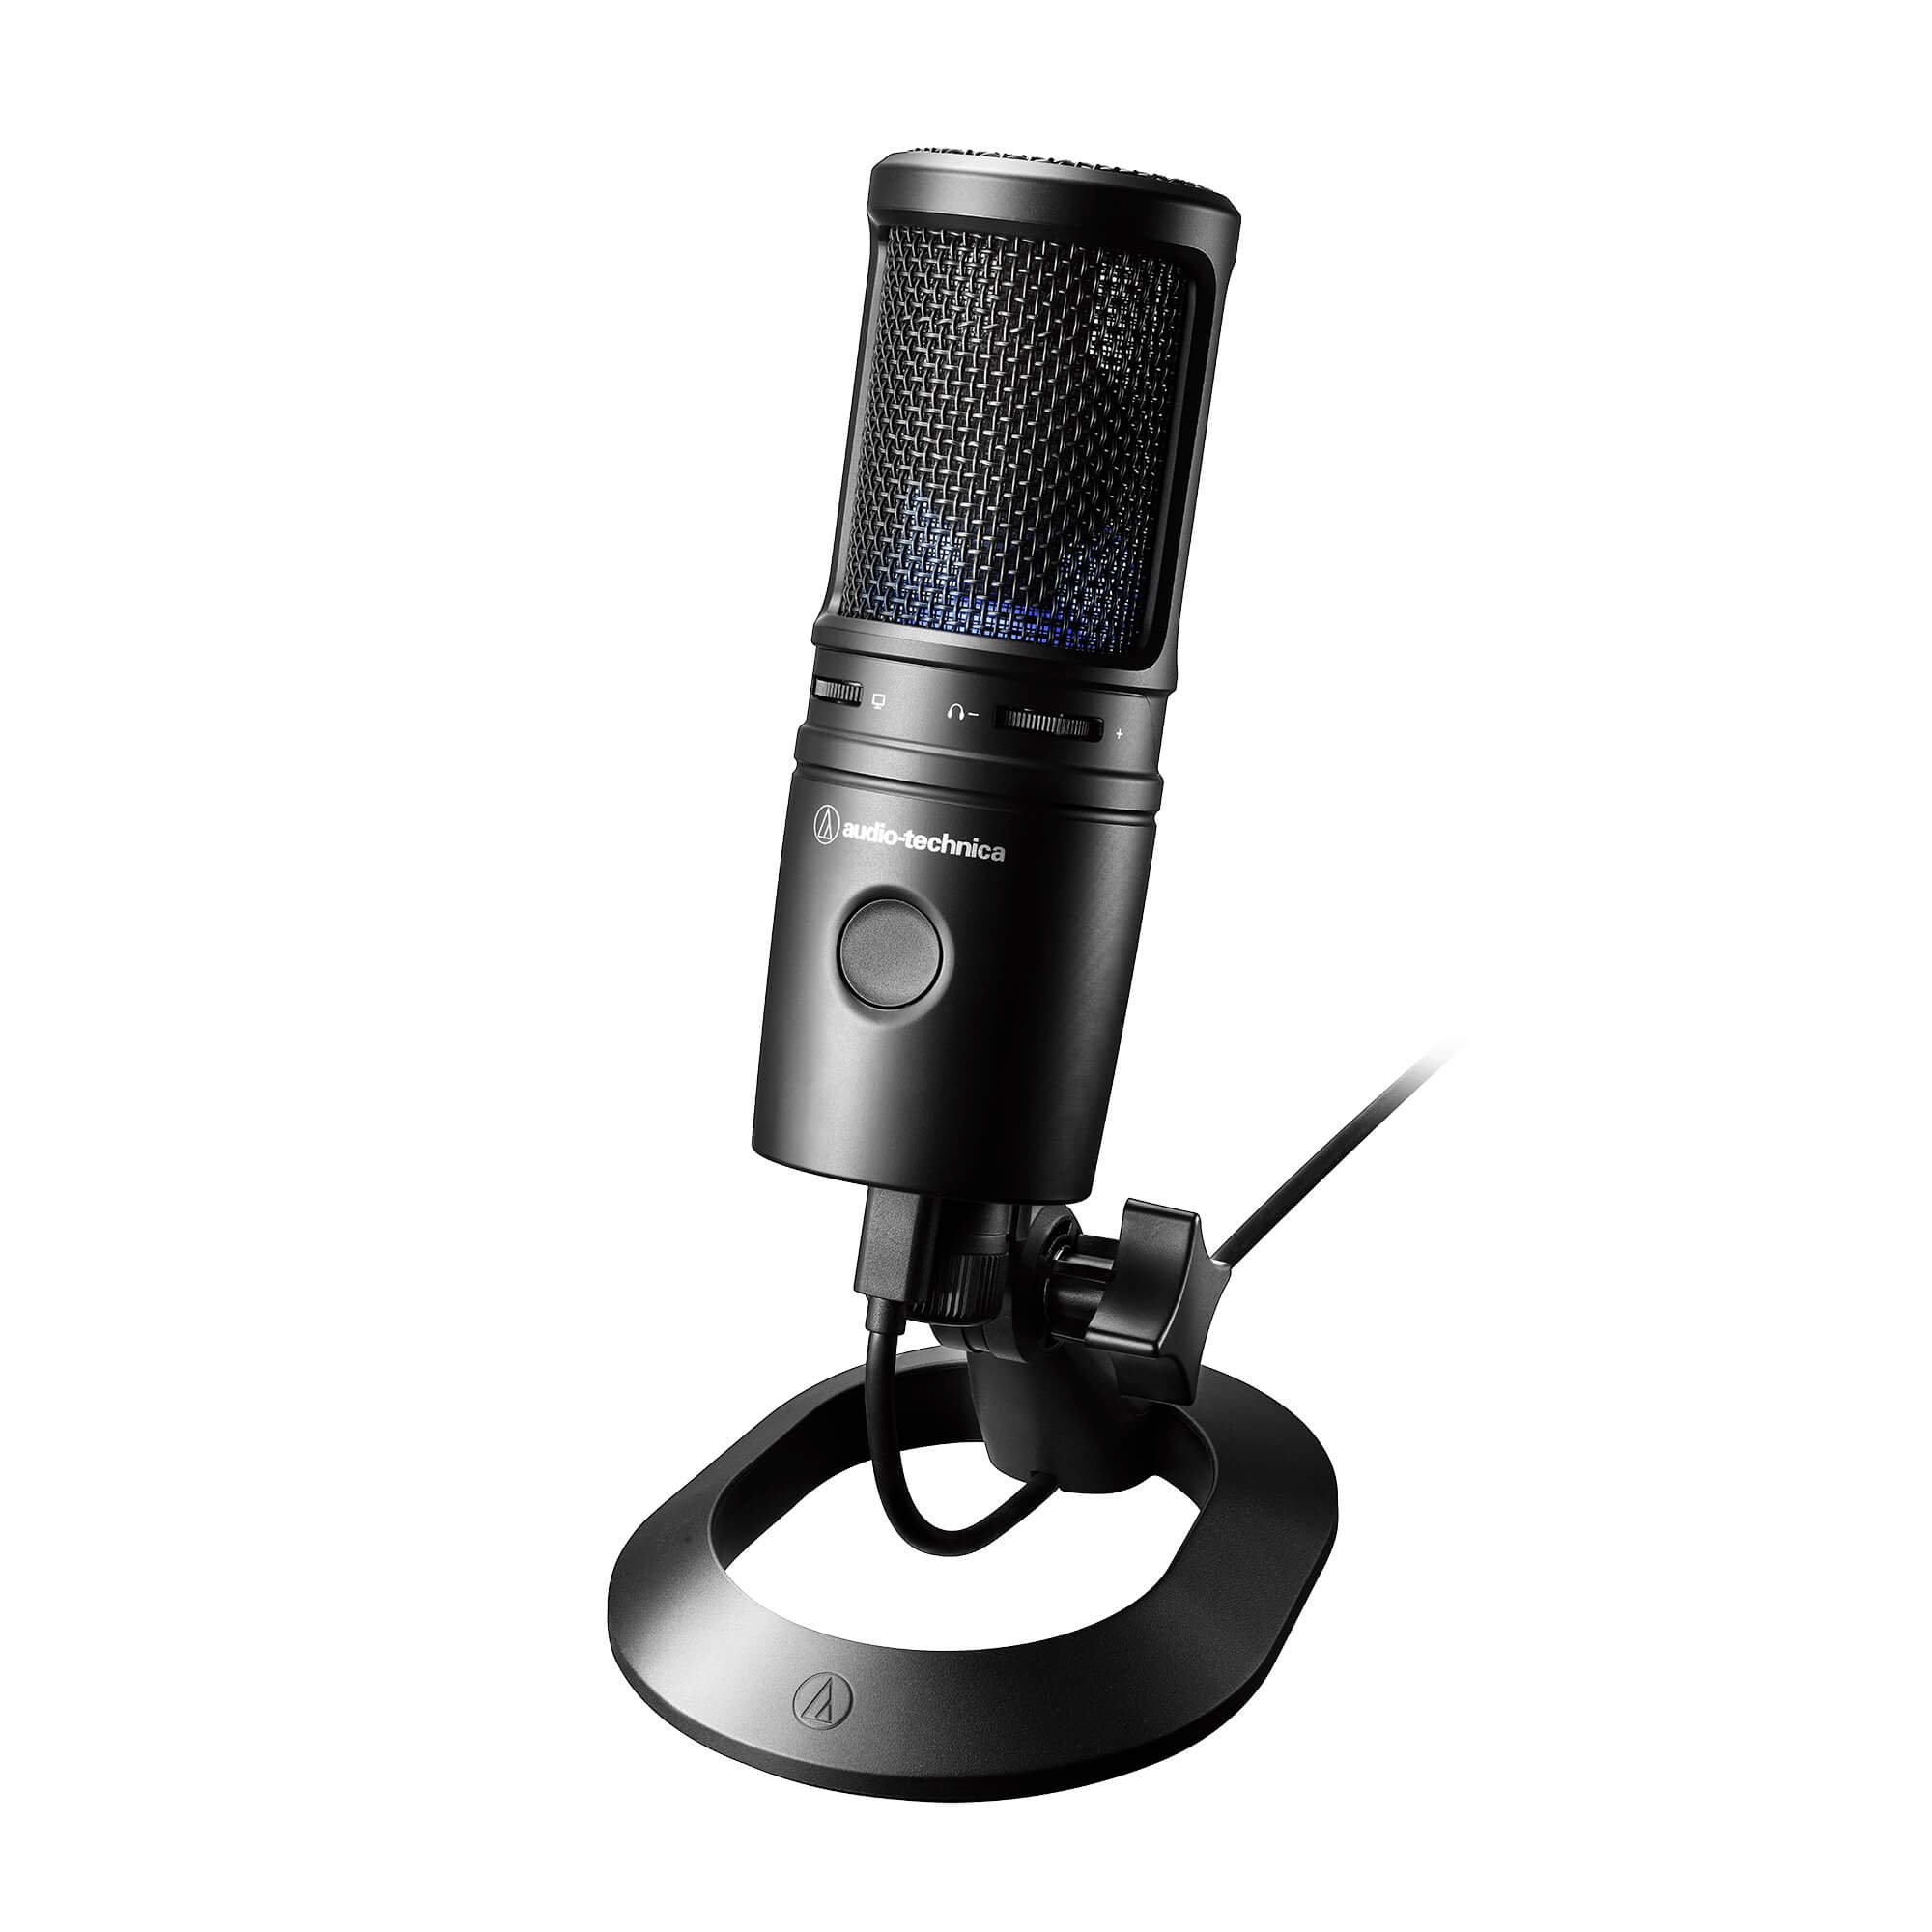  Audio-Technica Microphone AT2020 Pro Cardioid